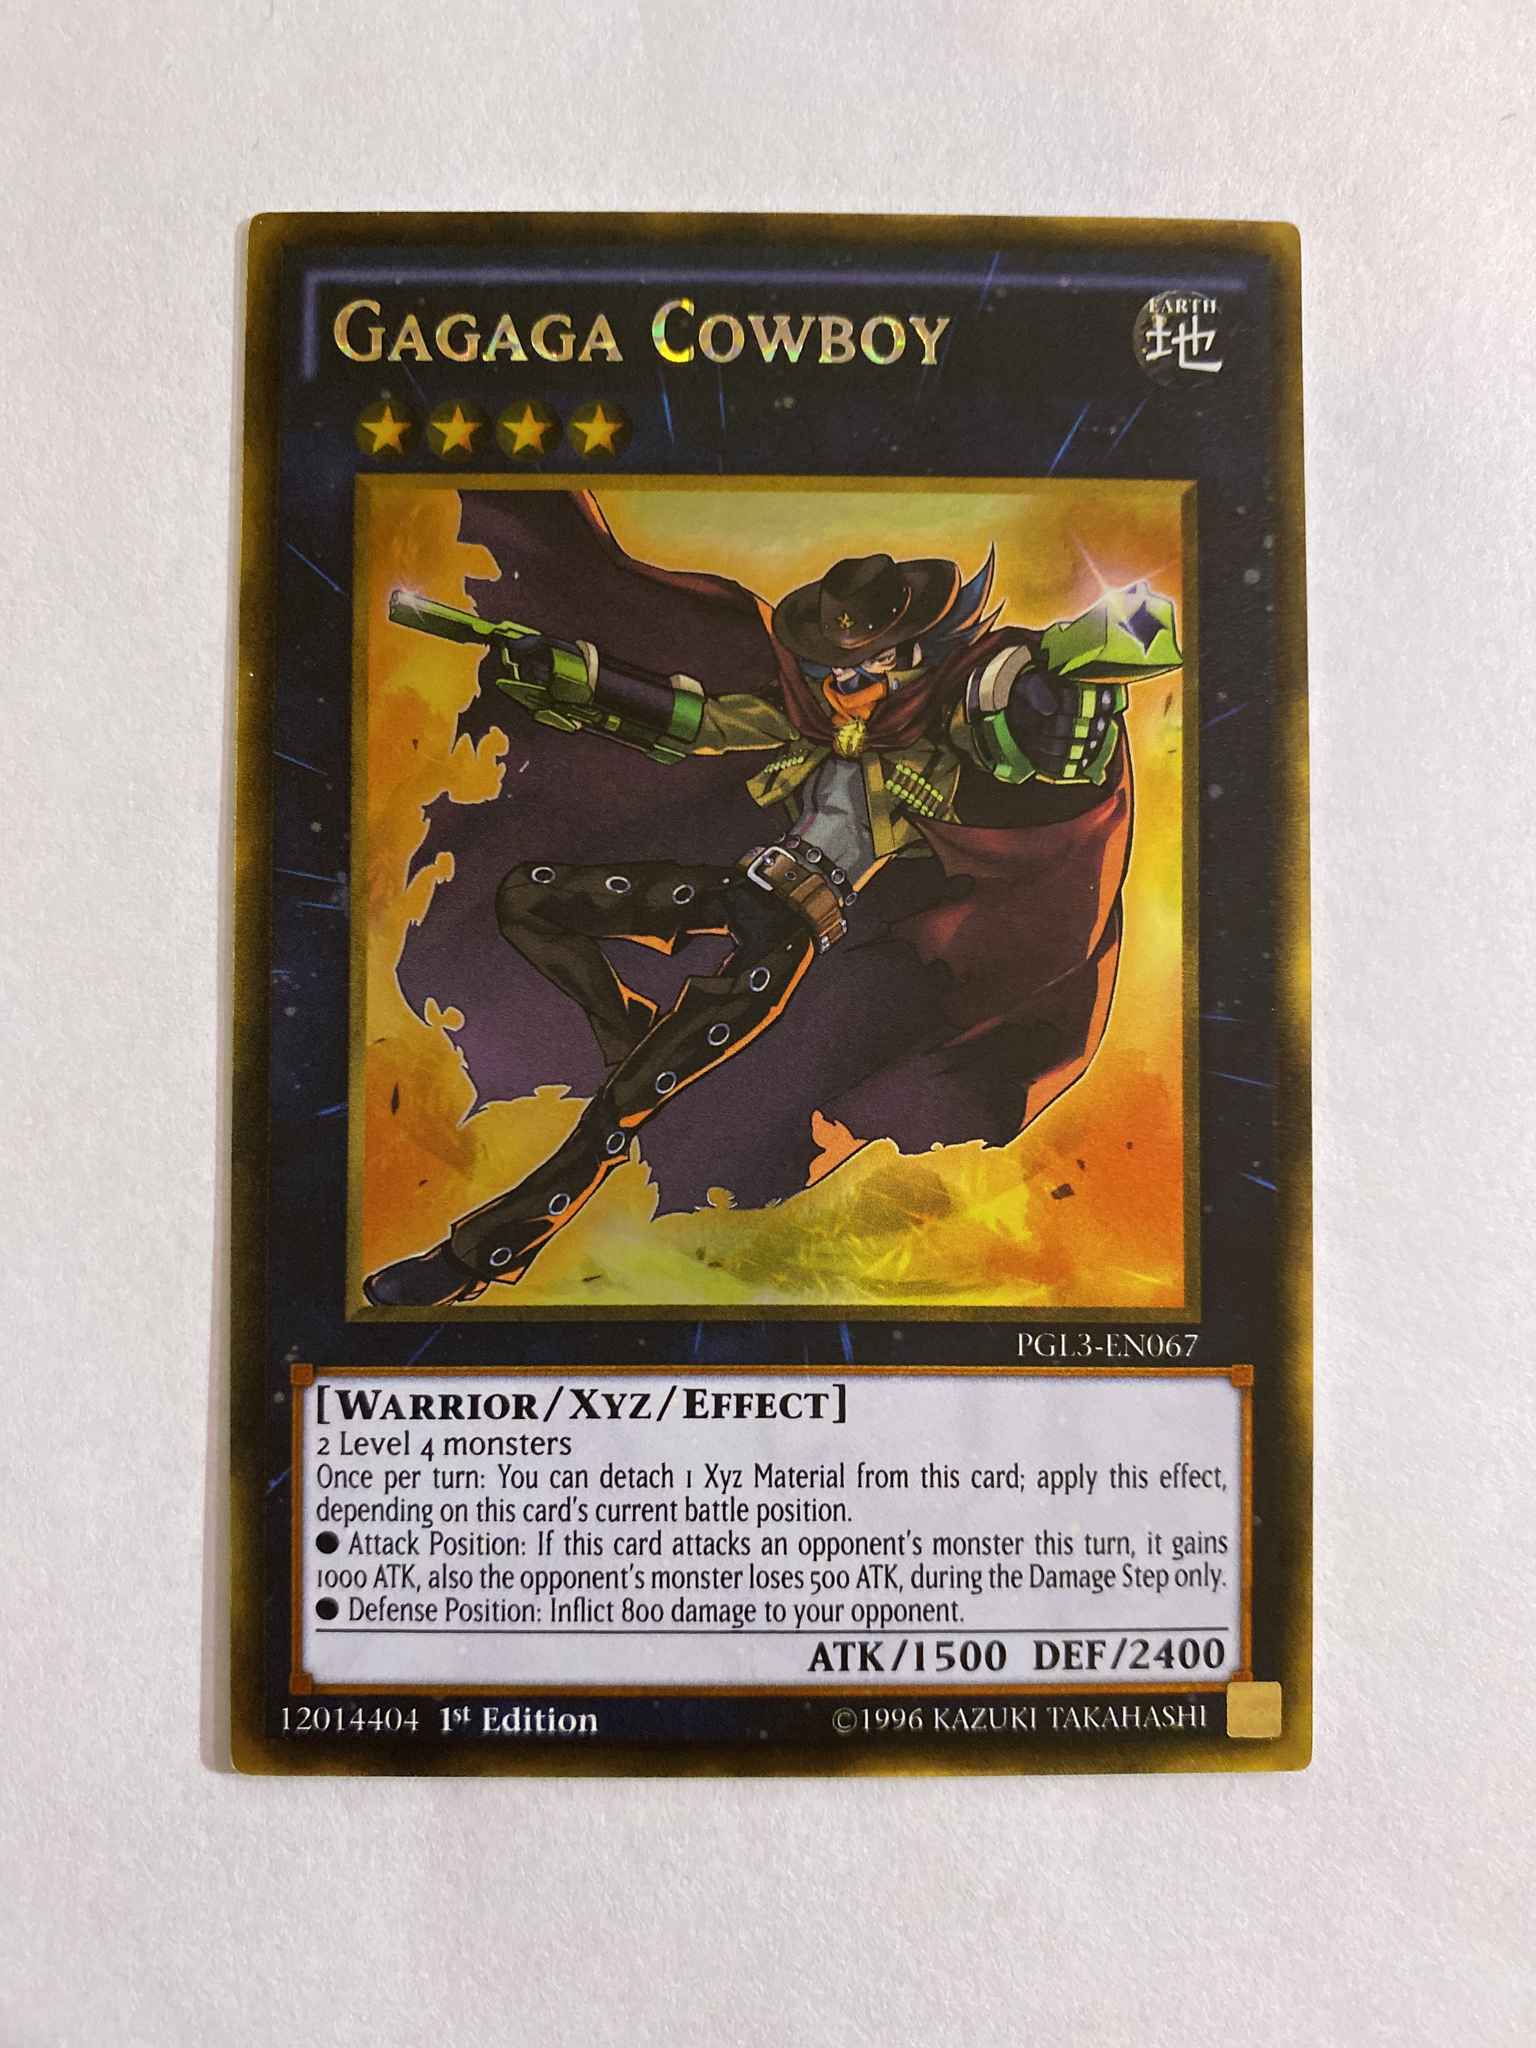 Gagaga-Cowboy PGL3-DE067 Gold Rare DE NM